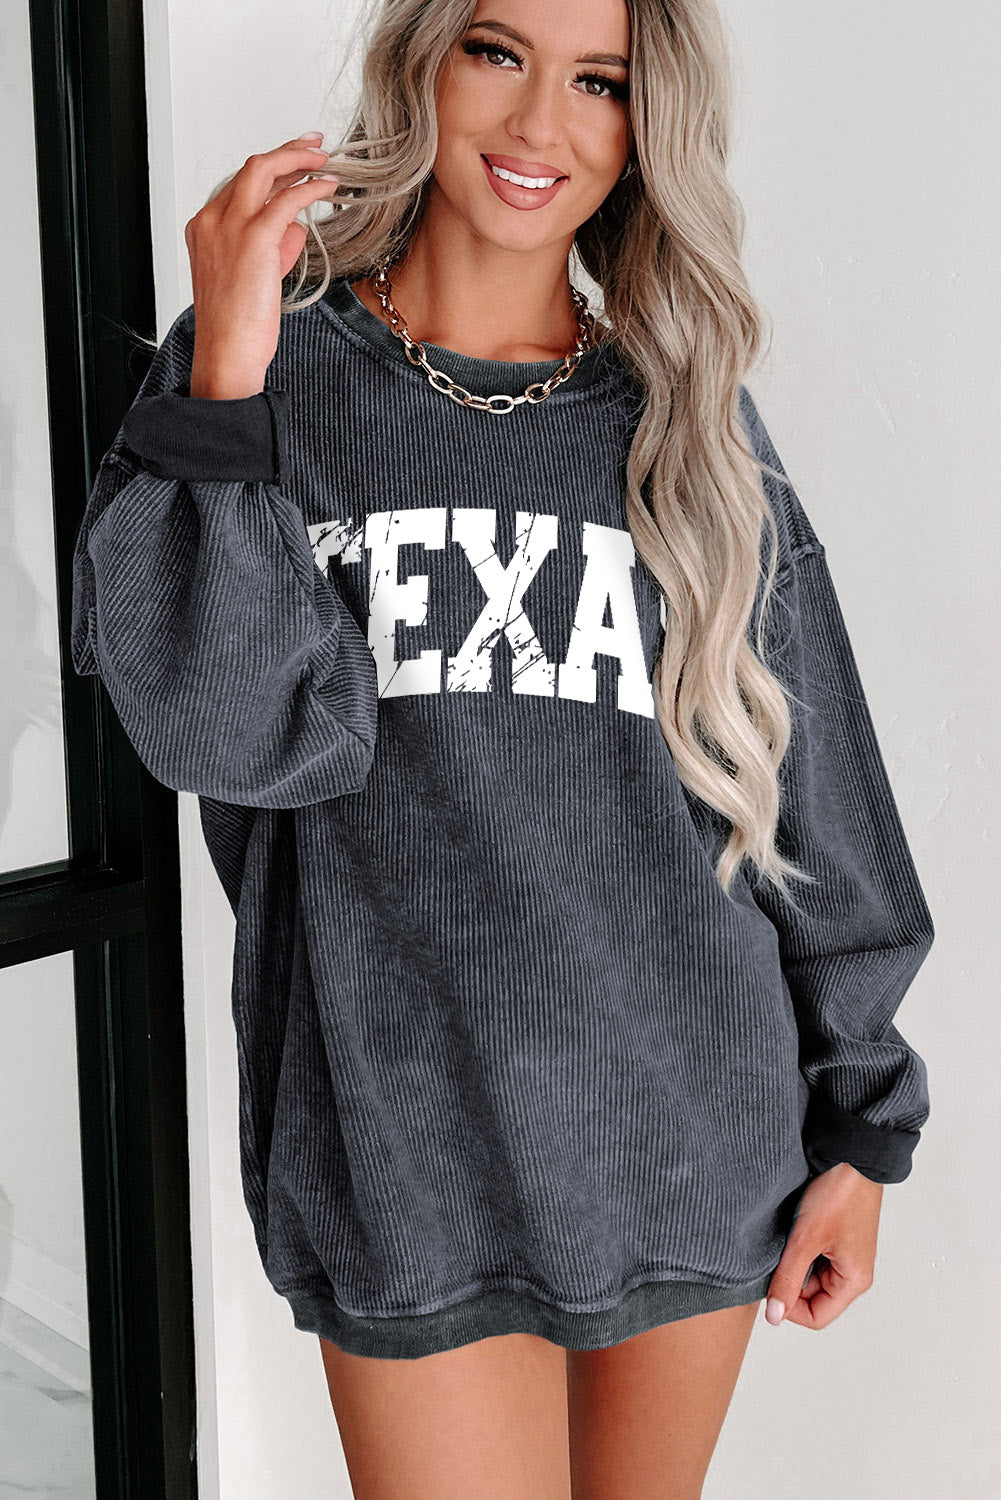 Gray TEXAS Graphic Corded Pullover Sweatshirt